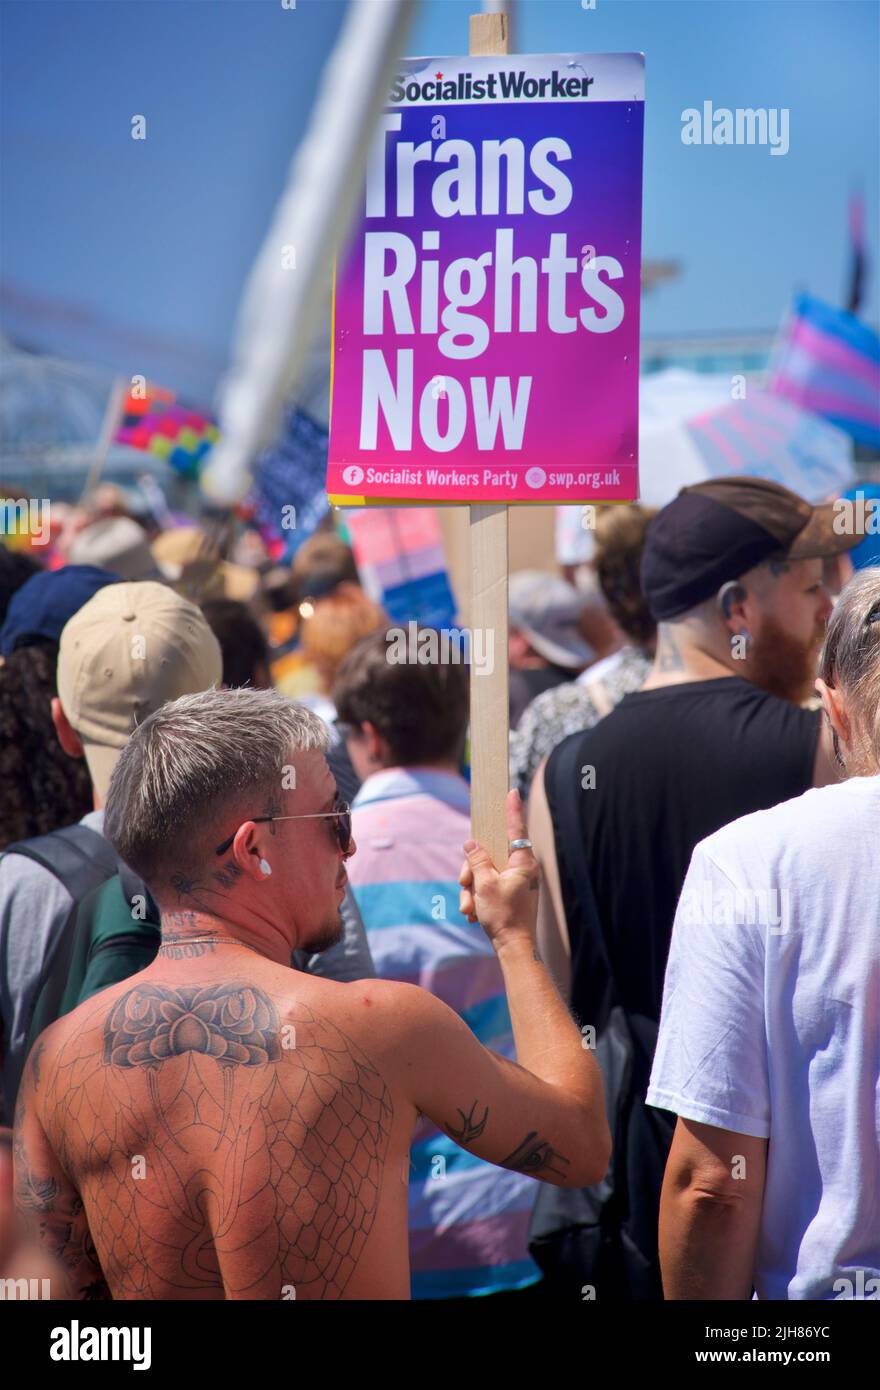 Trans Pride Brighton & Hove Protesta marcha a lo largo del paseo marítimo, Brighton & Hove. La lectura del cartel TRANS RIGHTS NOW. 16 de julio de 2022. Crédito: J. Marshall / Alamy Live News Foto de stock